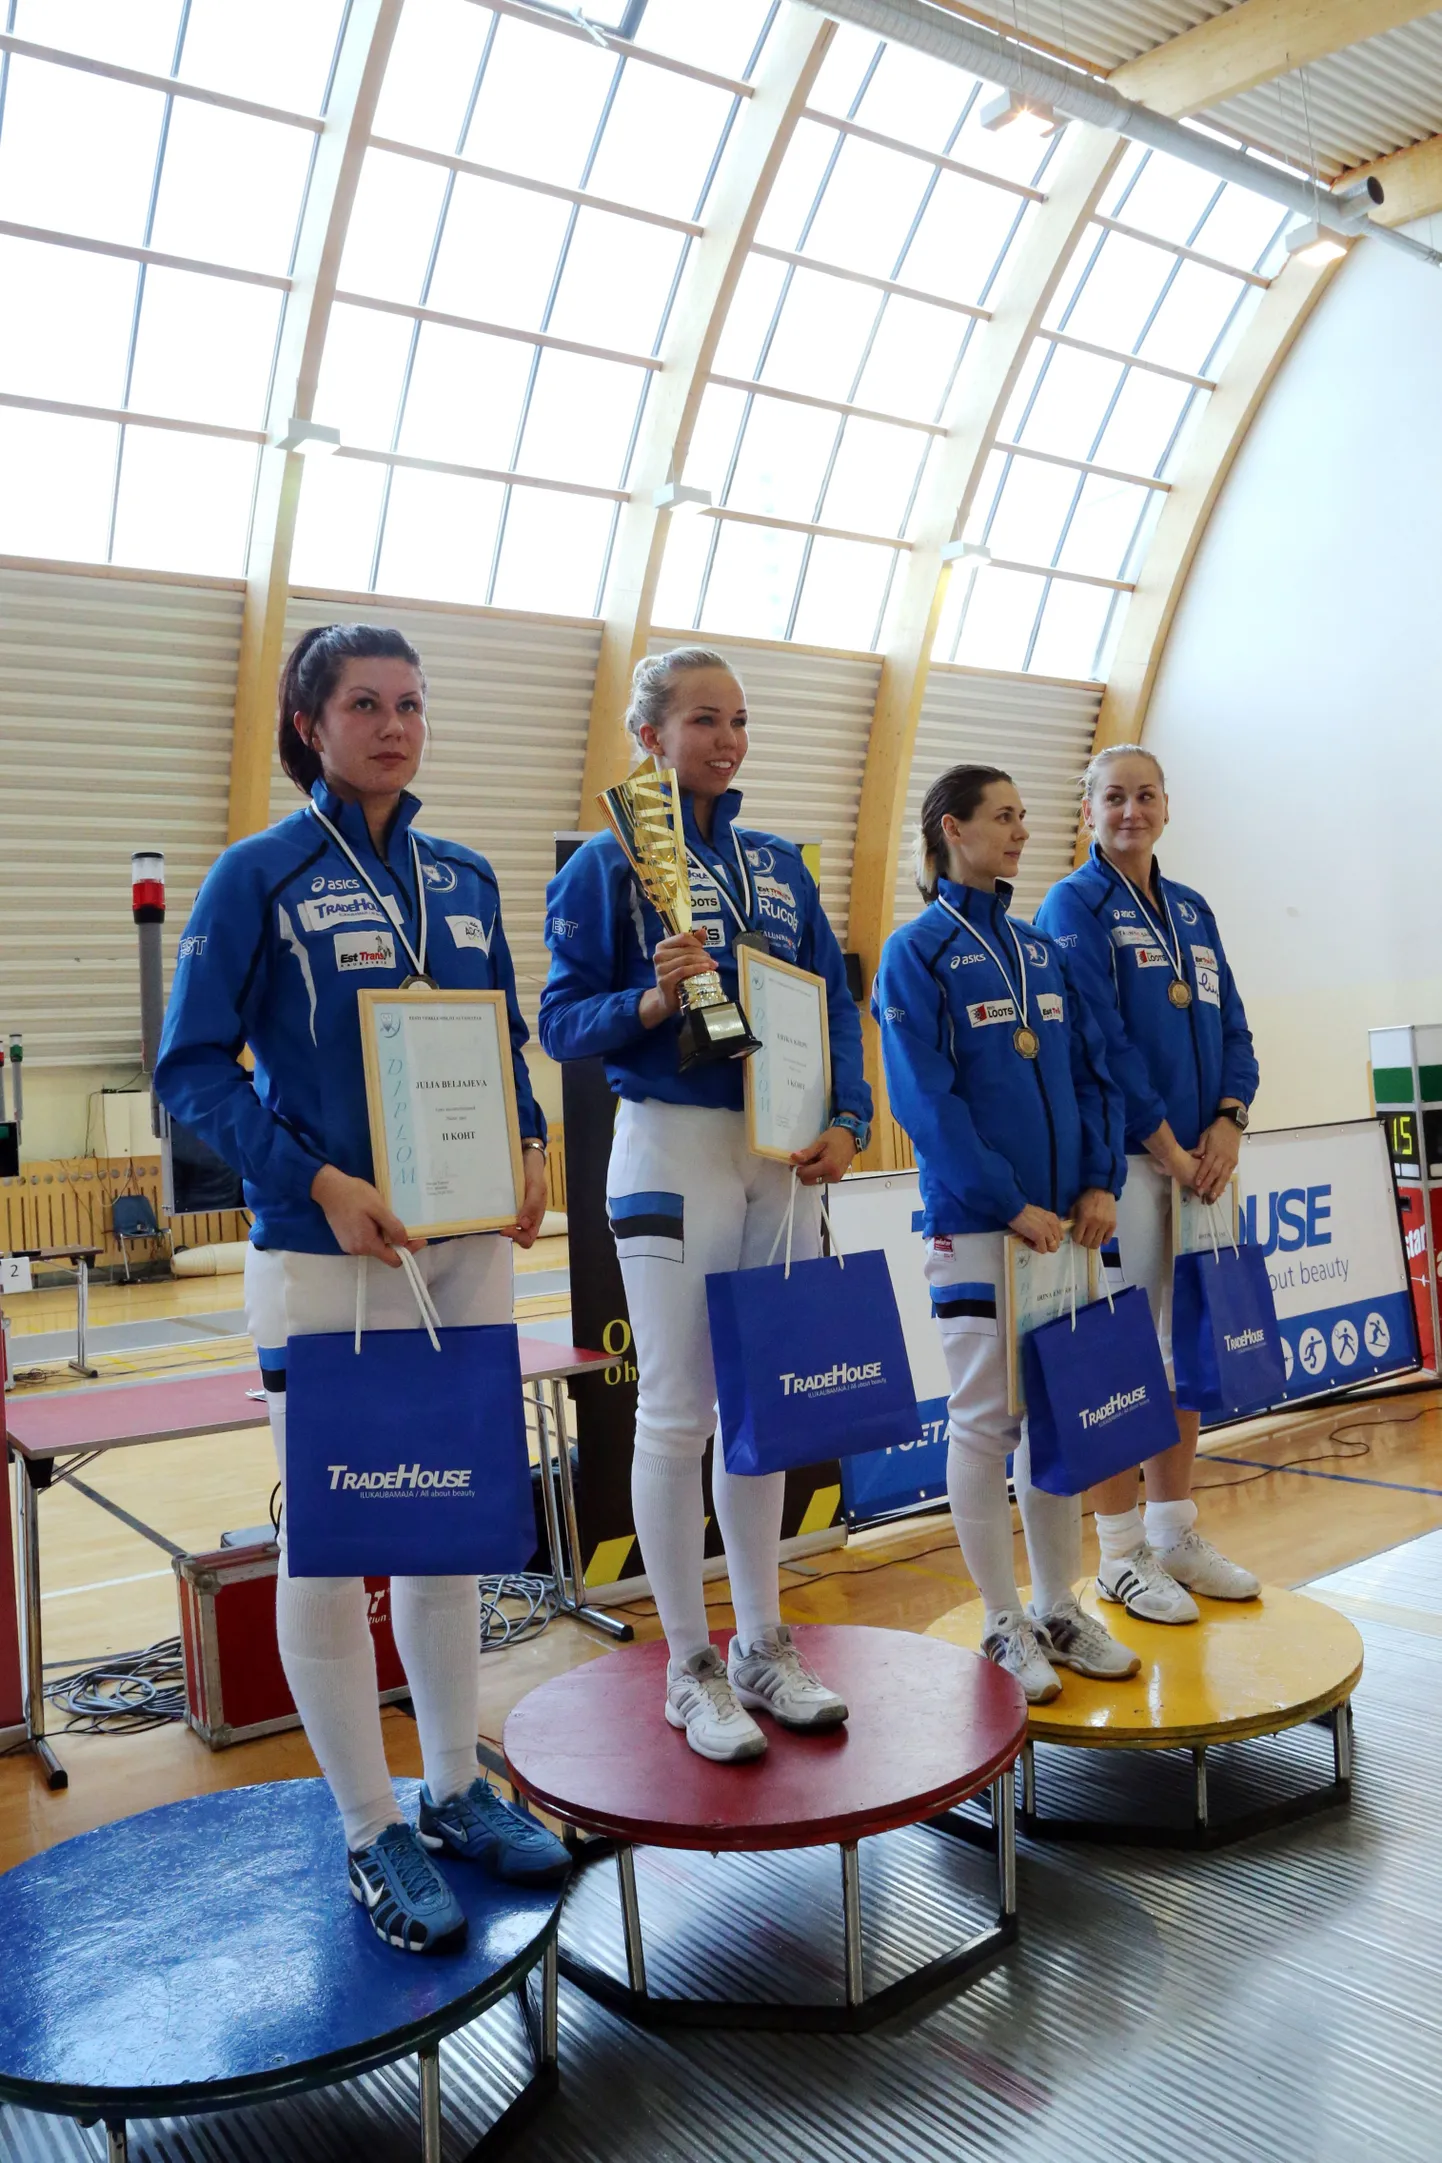 Слева направо: Юлия Беляева, Эрика Кирпу, Ирина Эмбрих и Кристина Кууск на соревнованиях в Эстонии.